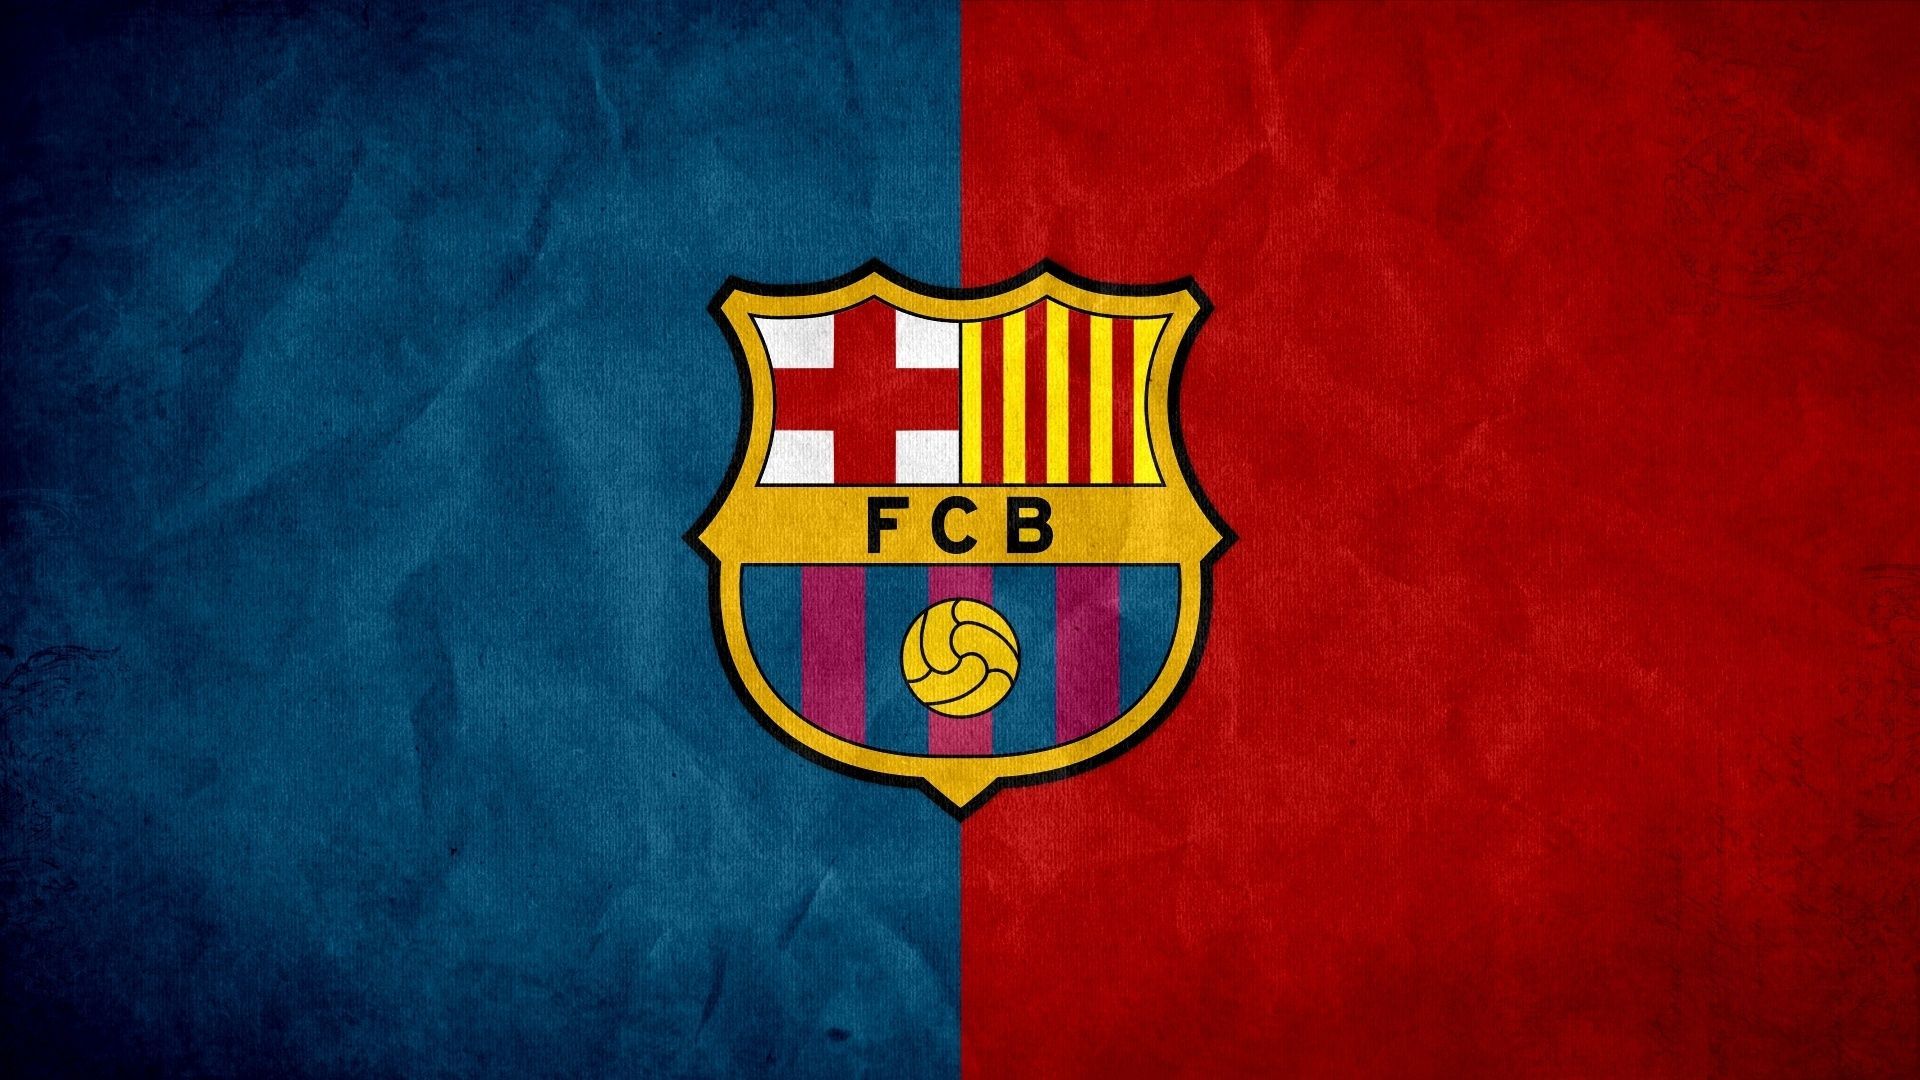 Fc barcelona logo wallpapers